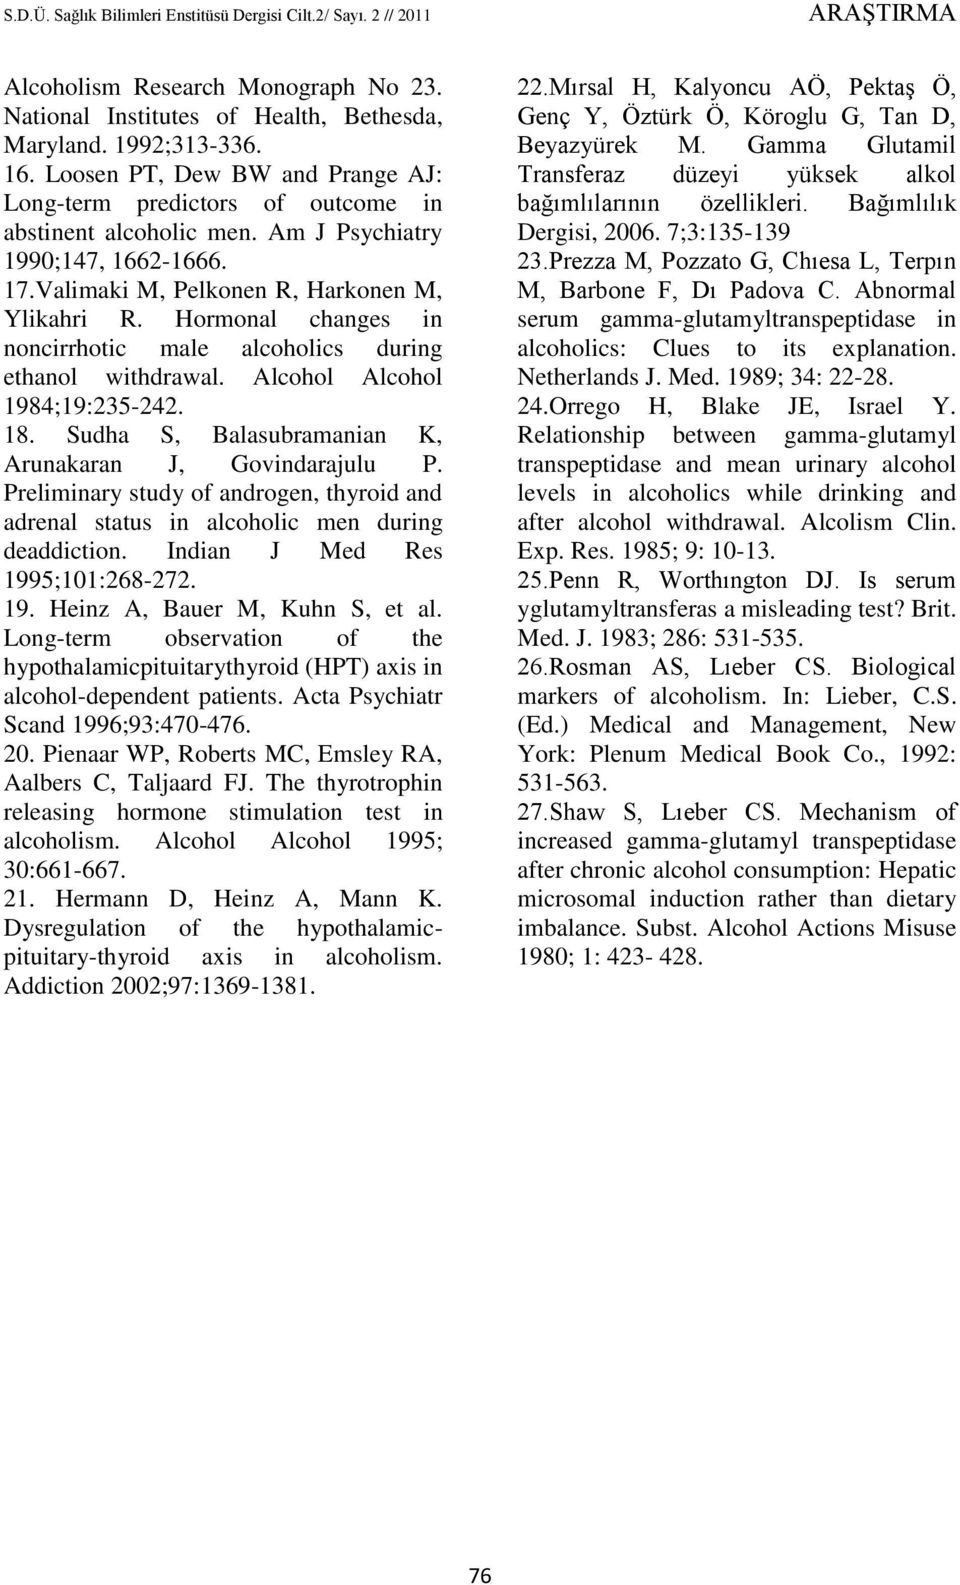 Sudha S, Balasubramanian K, Arunakaran J, Govindarajulu P. Preliminary study of androgen, thyroid and adrenal status in alcoholic men during deaddiction. Indian J Med Res 199